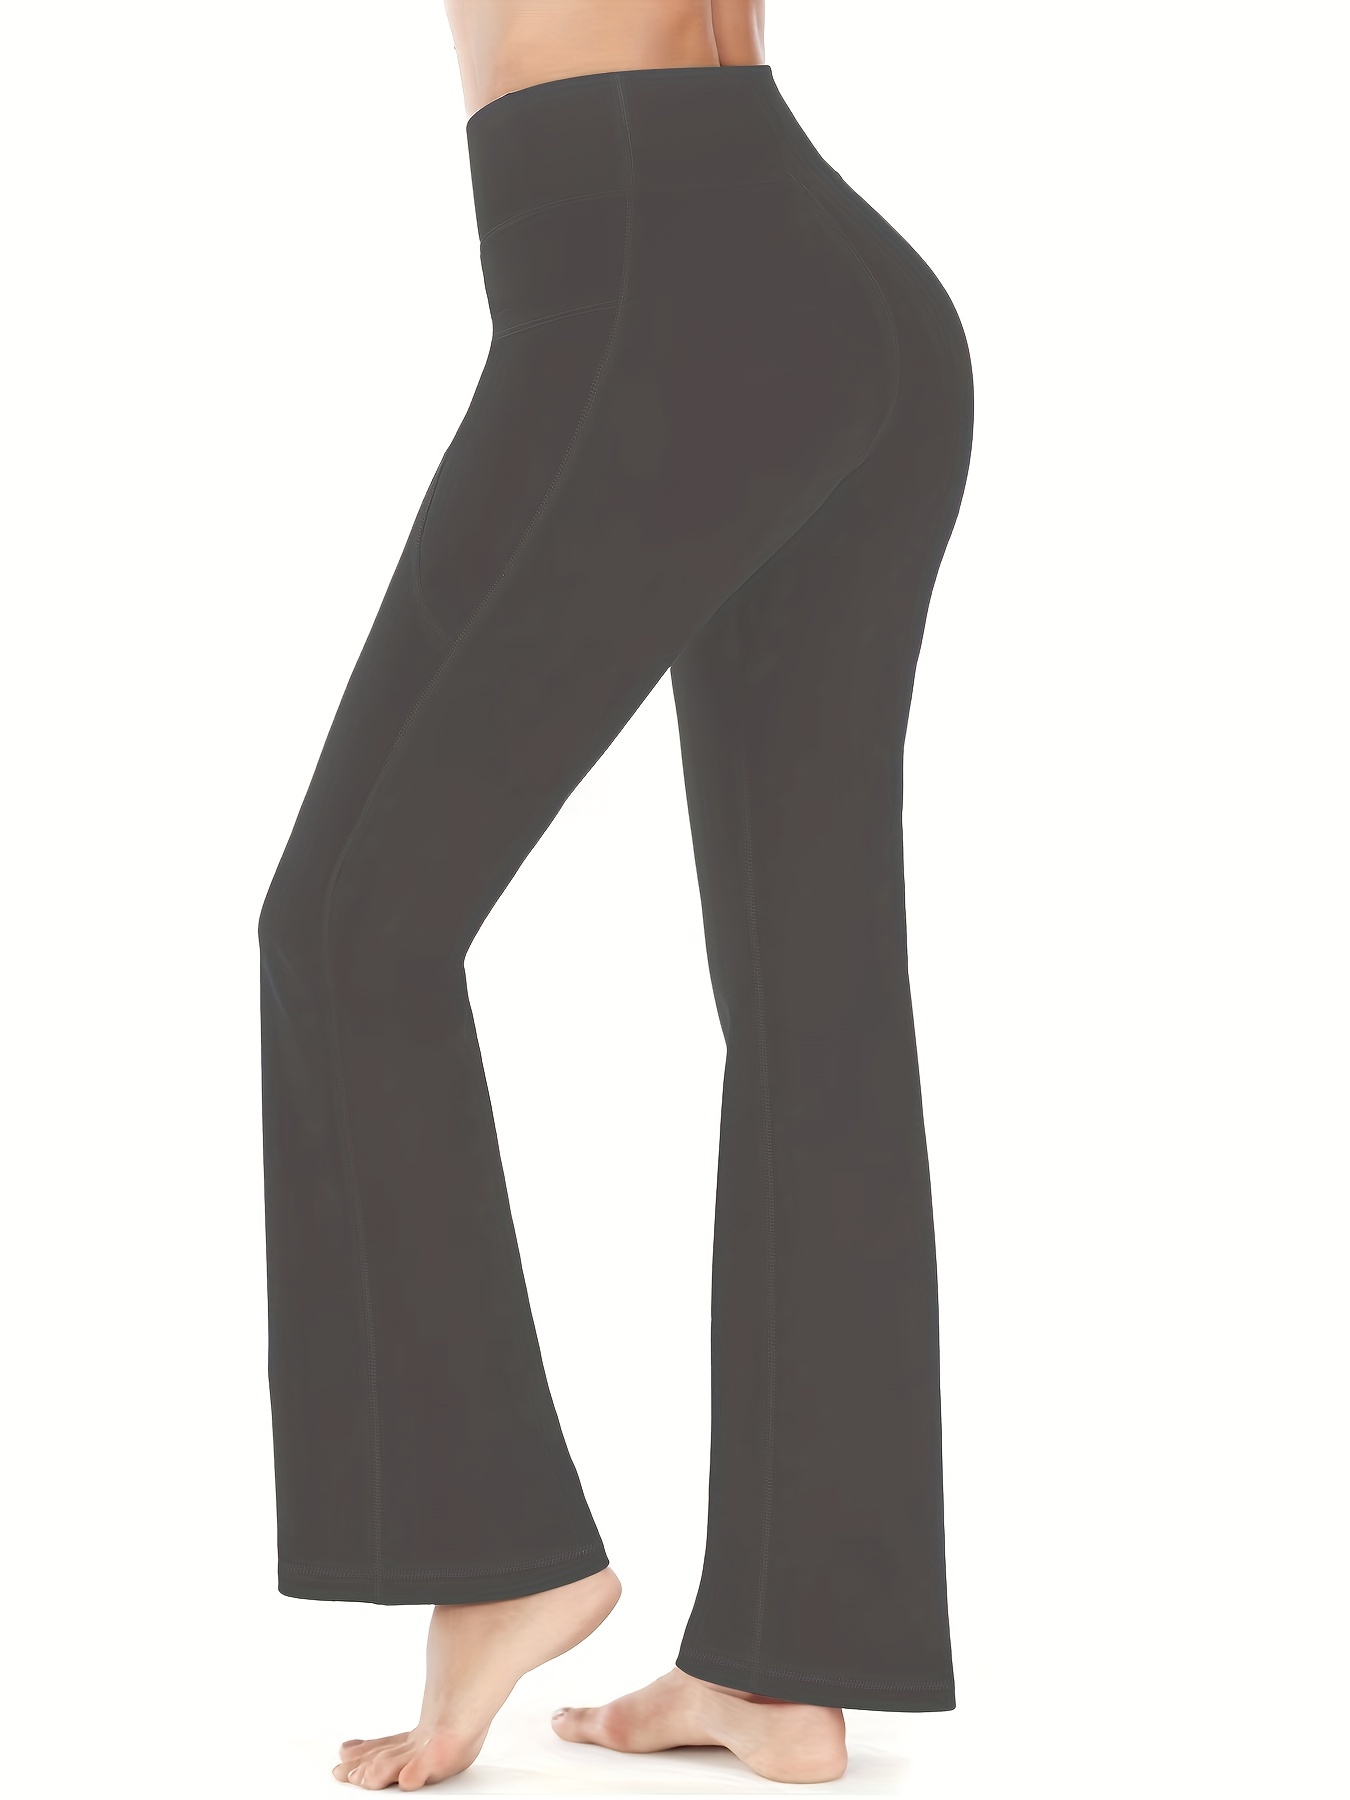  SEAJOJO Women's High Waist Bootcut Yoga Pants Tummy Control  Workout Flare Leggings Black : Clothing, Shoes & Jewelry